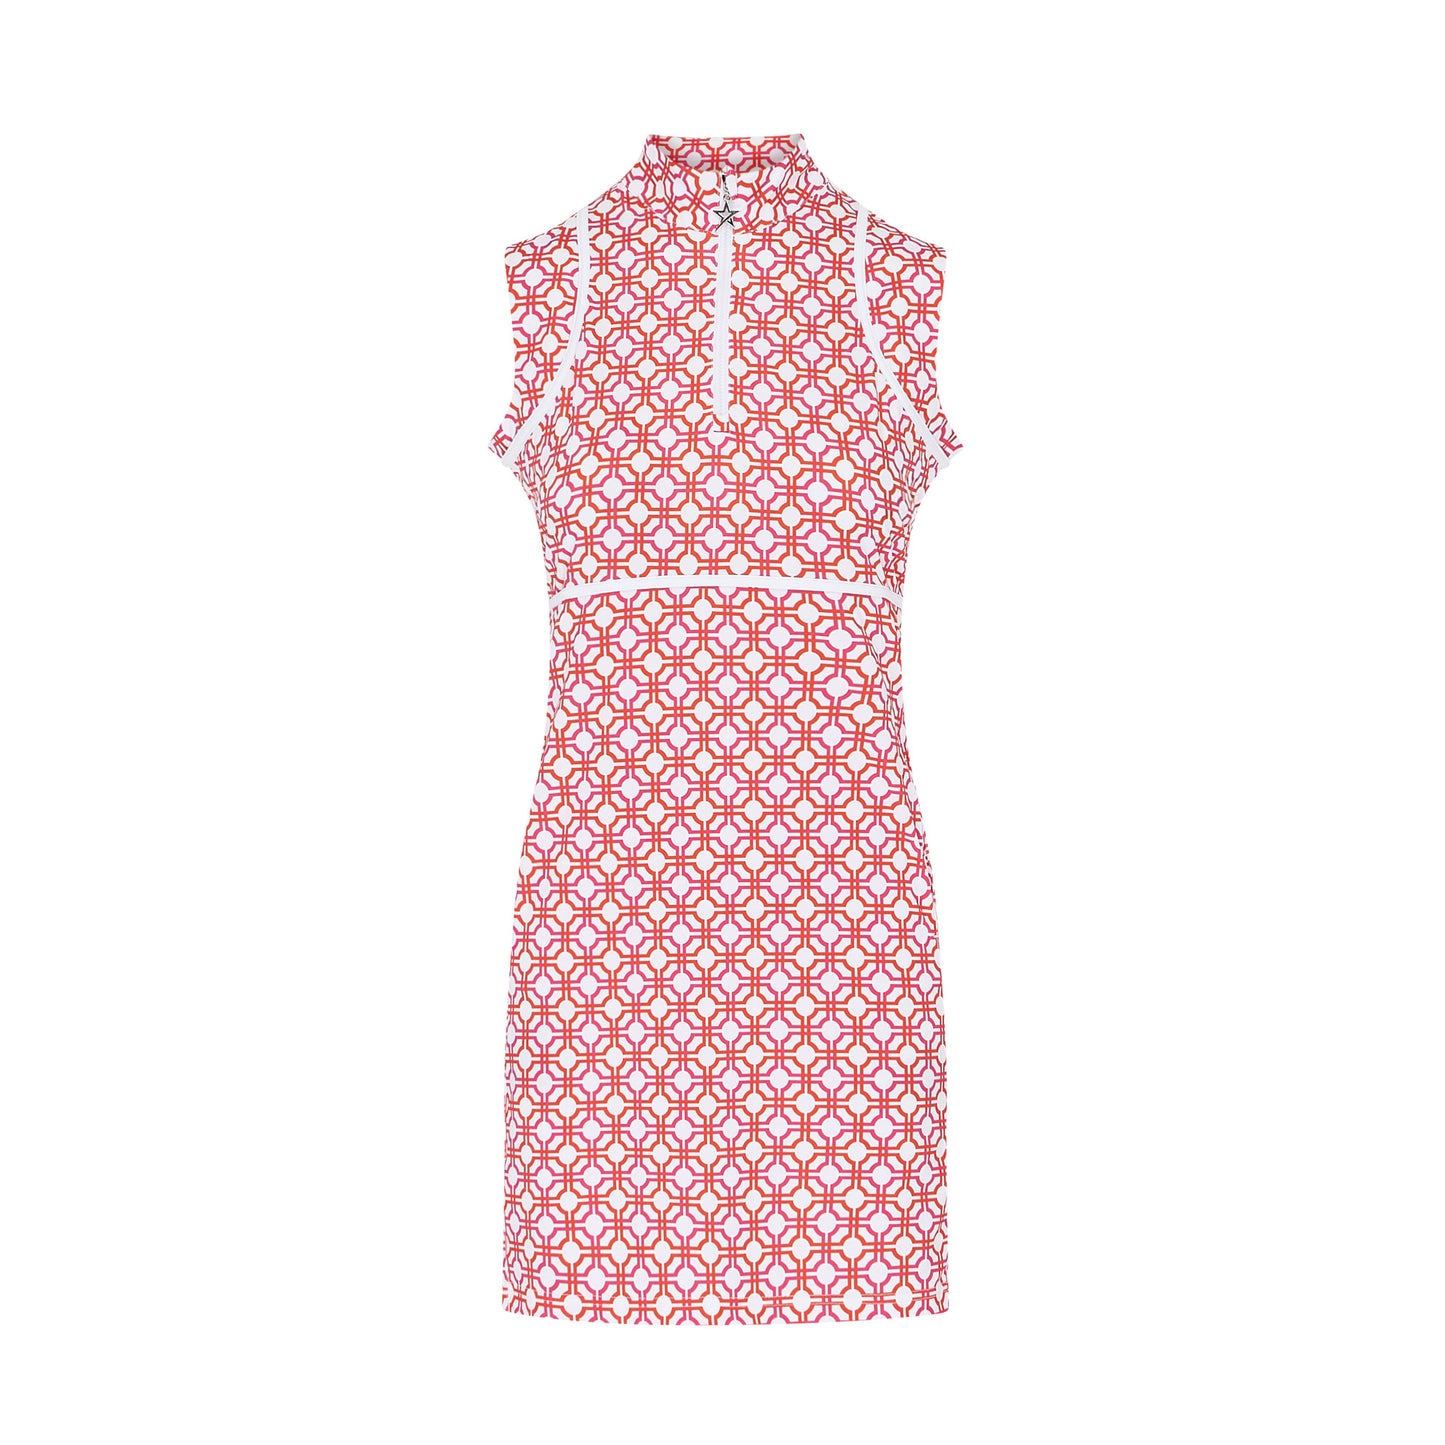 Swing Out Sister Ladies Sleeveless Golf Dress in Lush Pink and Mandarin Mosaic Pattern